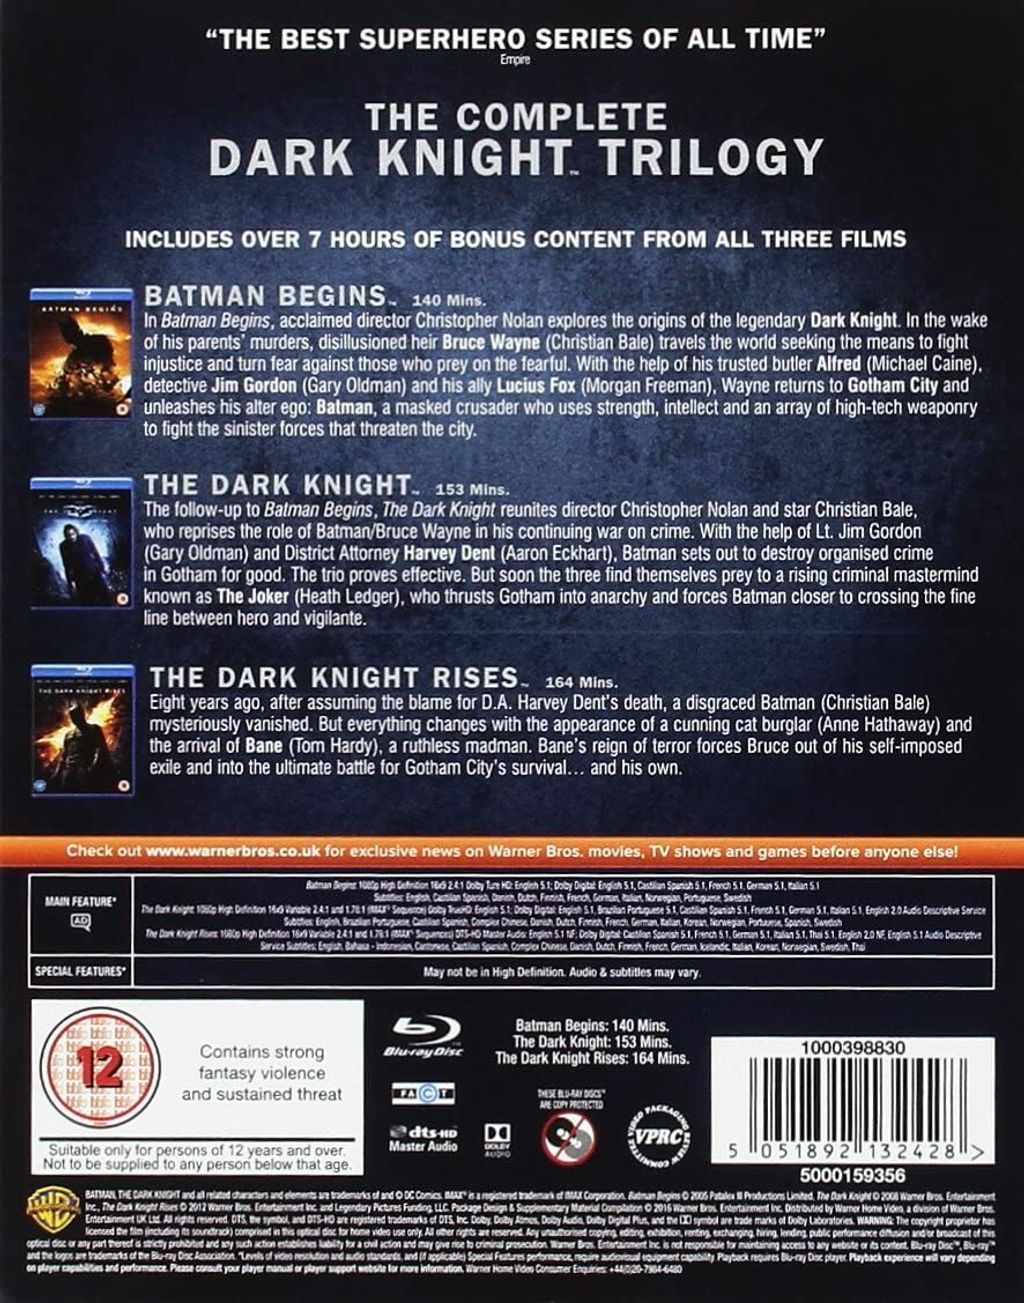 THE DARK KNIGHT TRILOGY [Blu-ray] 5-discs2.jpg